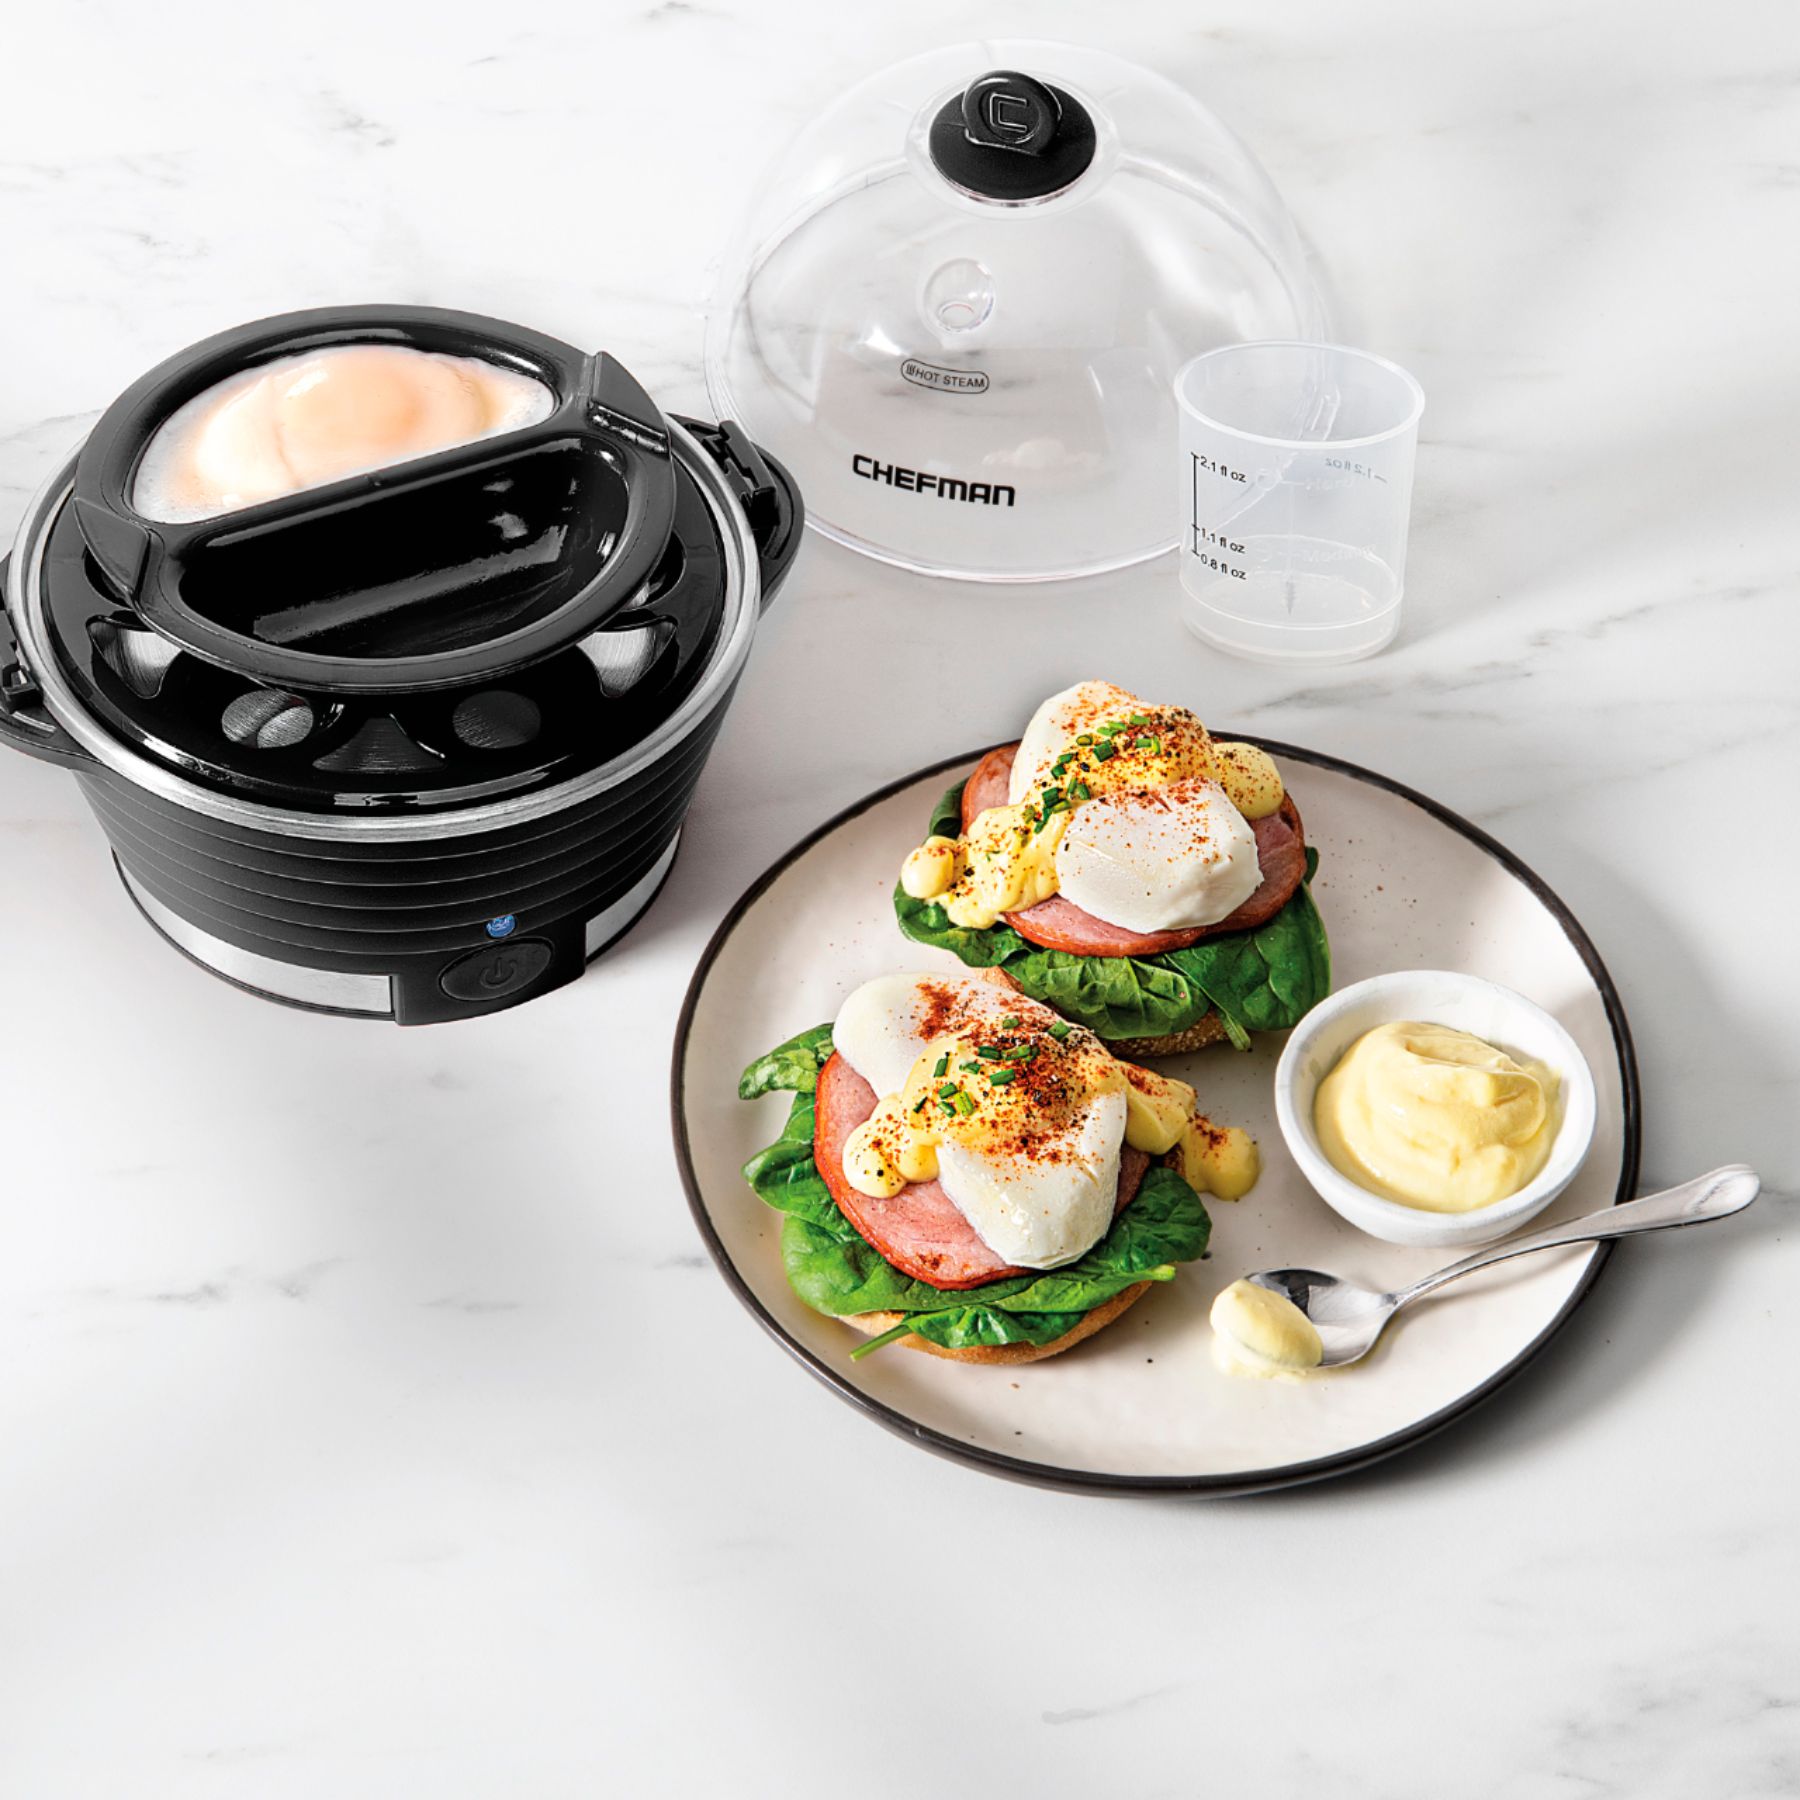 Best Buy: Chefman Electric Double Decker Egg Cooker Black RJ24-V2-DD-BLACK